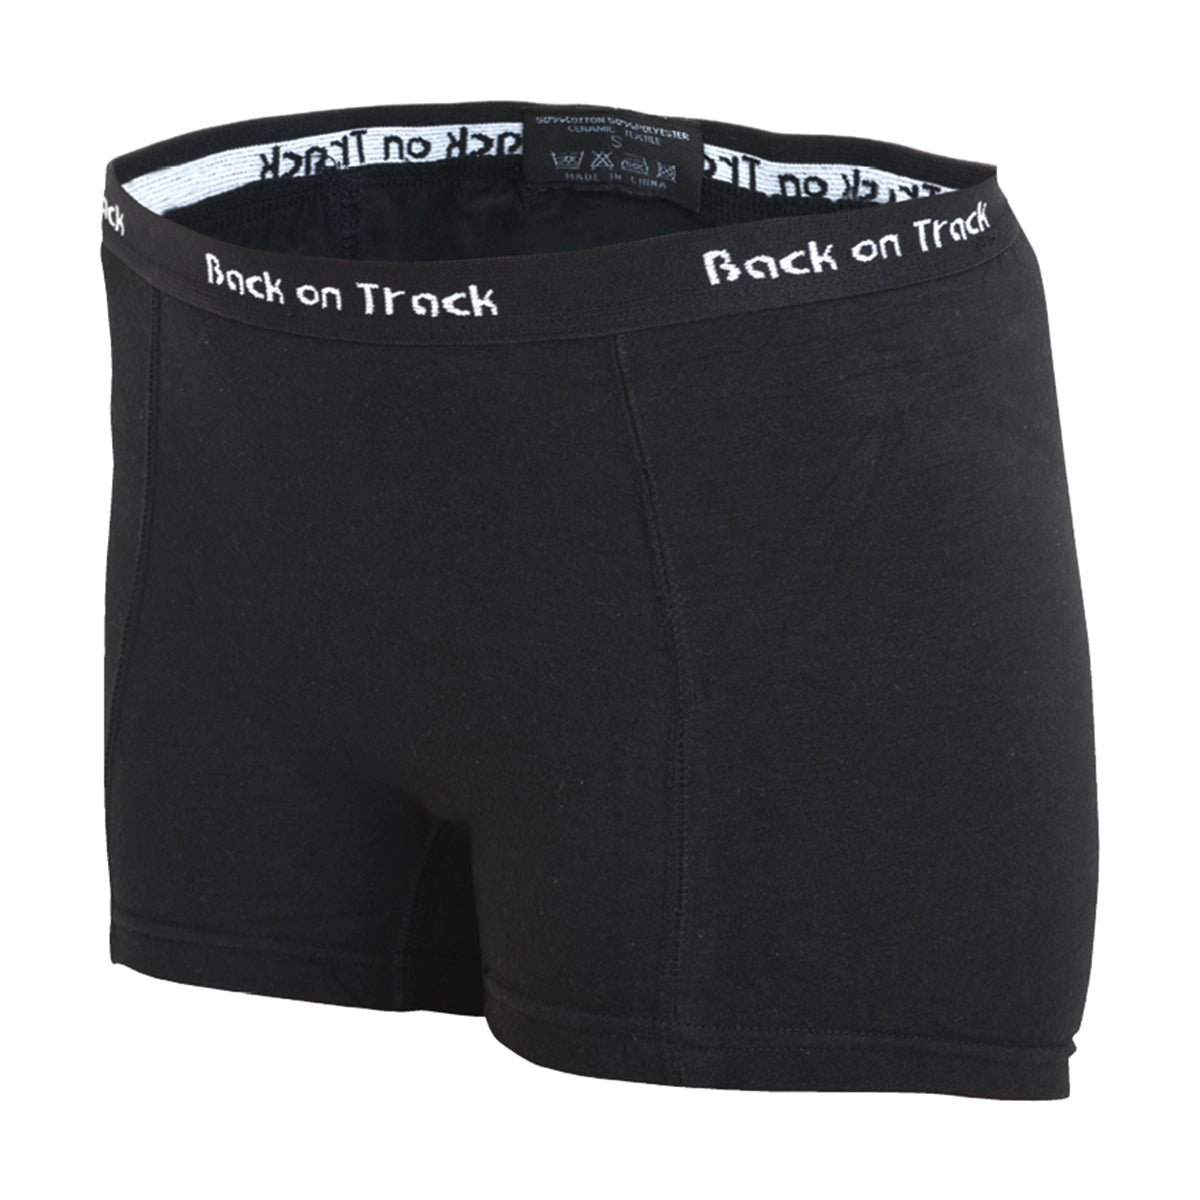 Back on Track Women's Boxer Shorts - Black